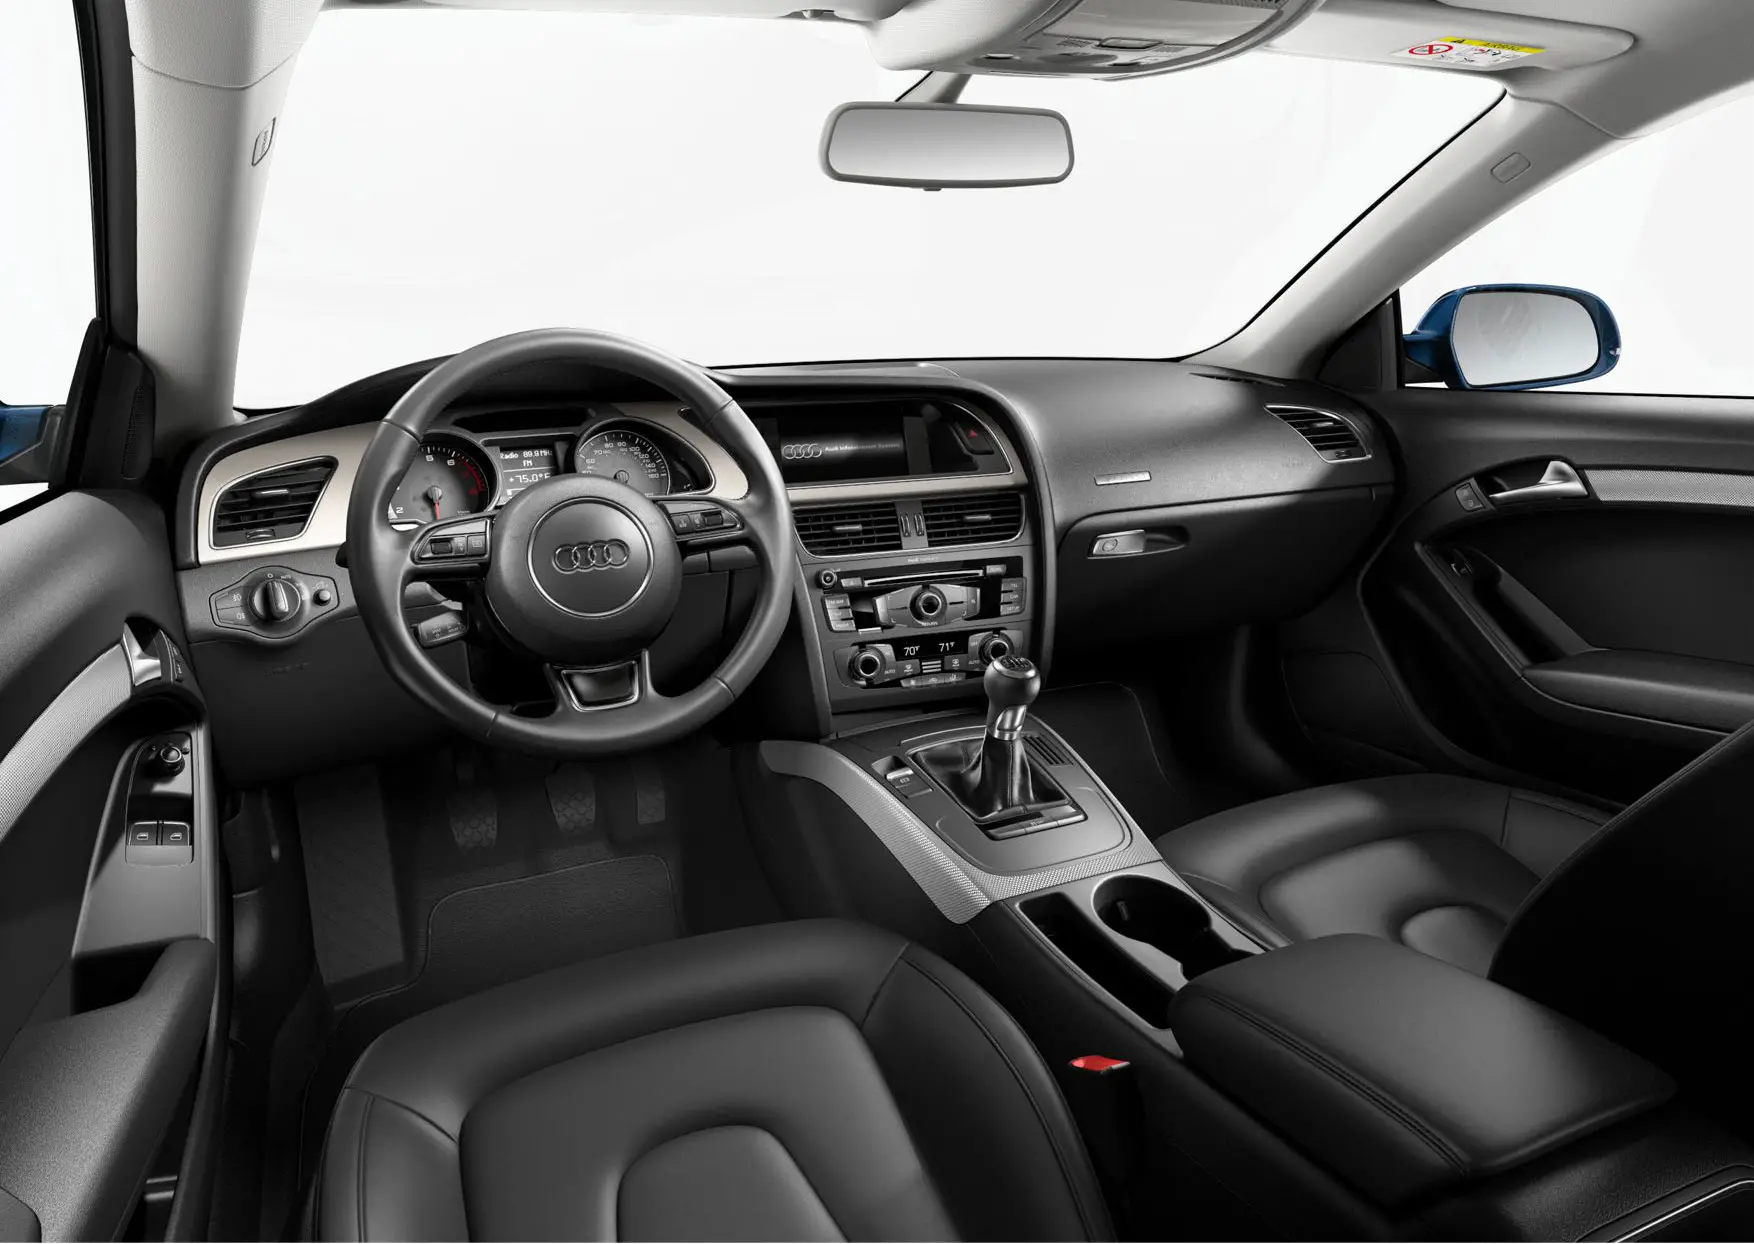 Audi A5 Premium Plus Coupe interior front view